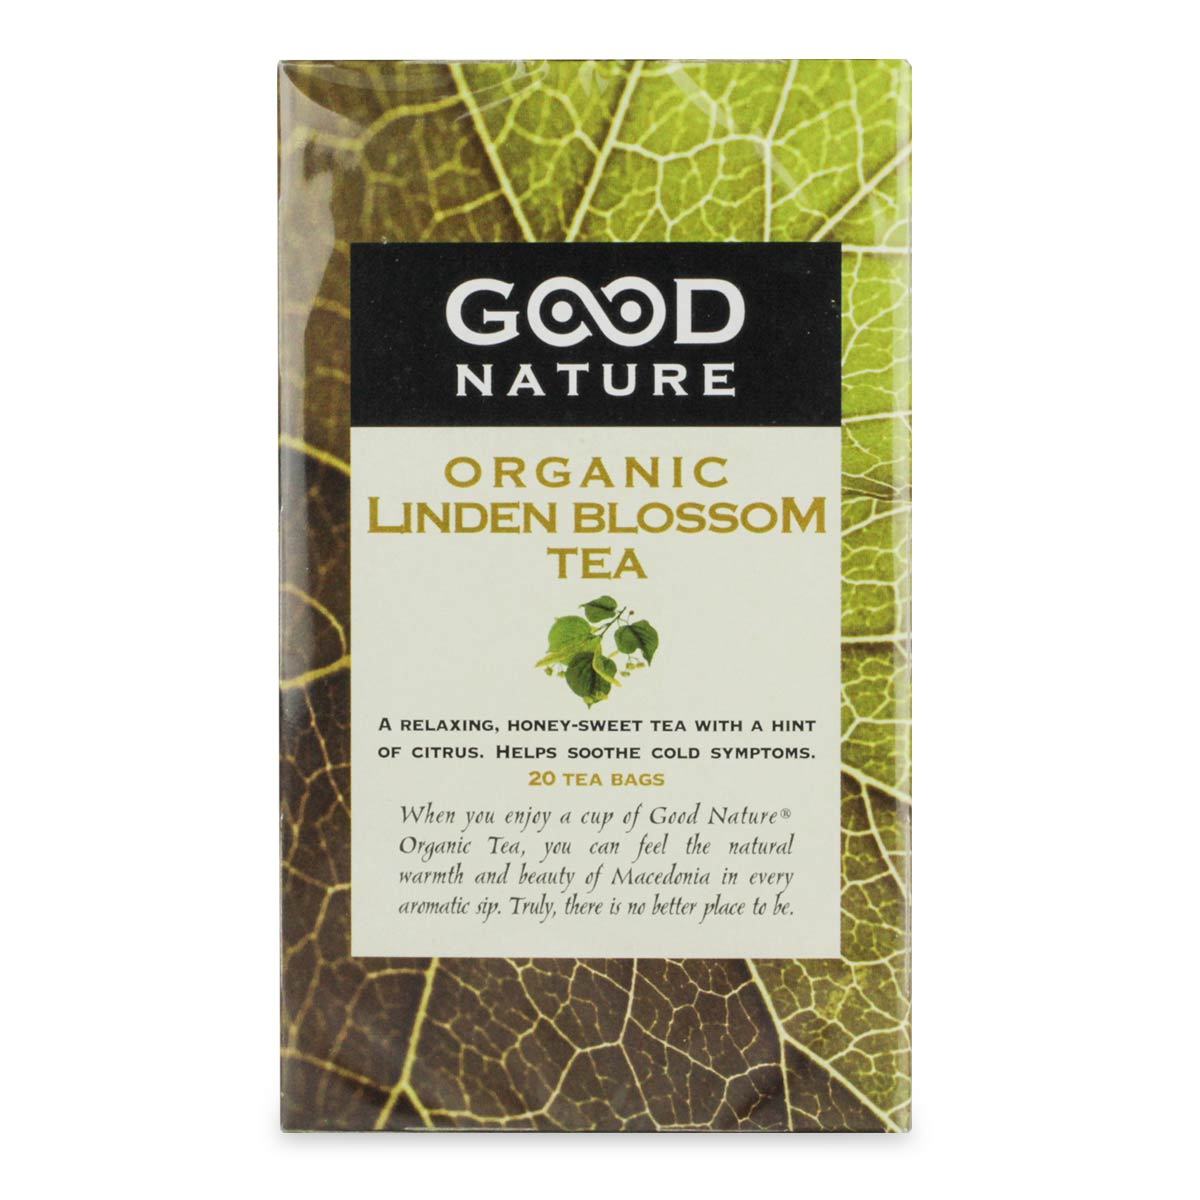 Primary image of Organic Linden Blossom Tea